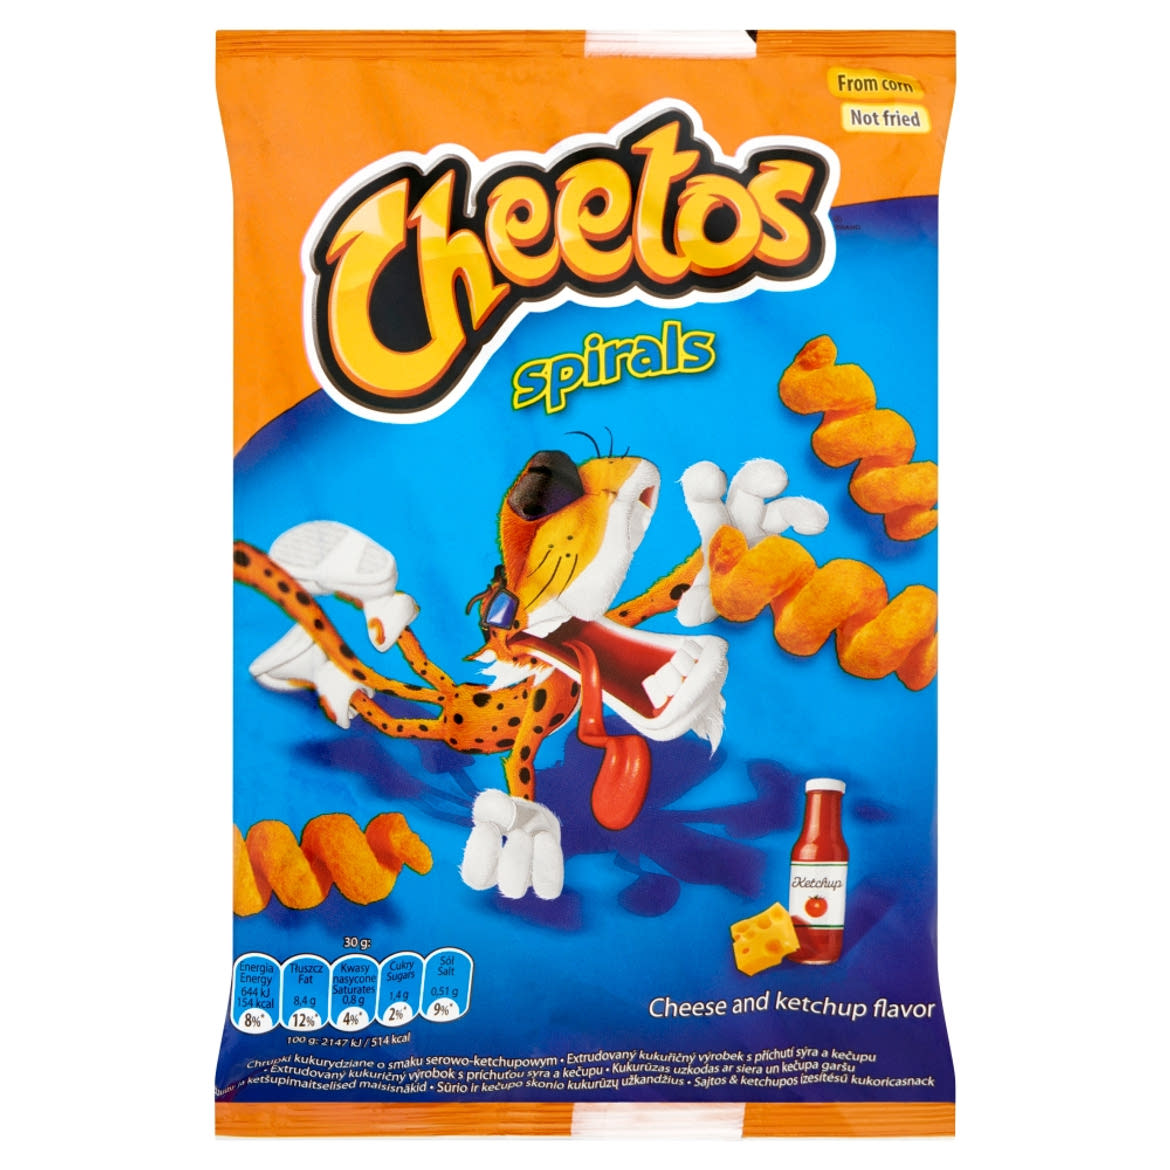 Cheetos Spirals sajtos & ketchupos ízesítésű kukoricasnack